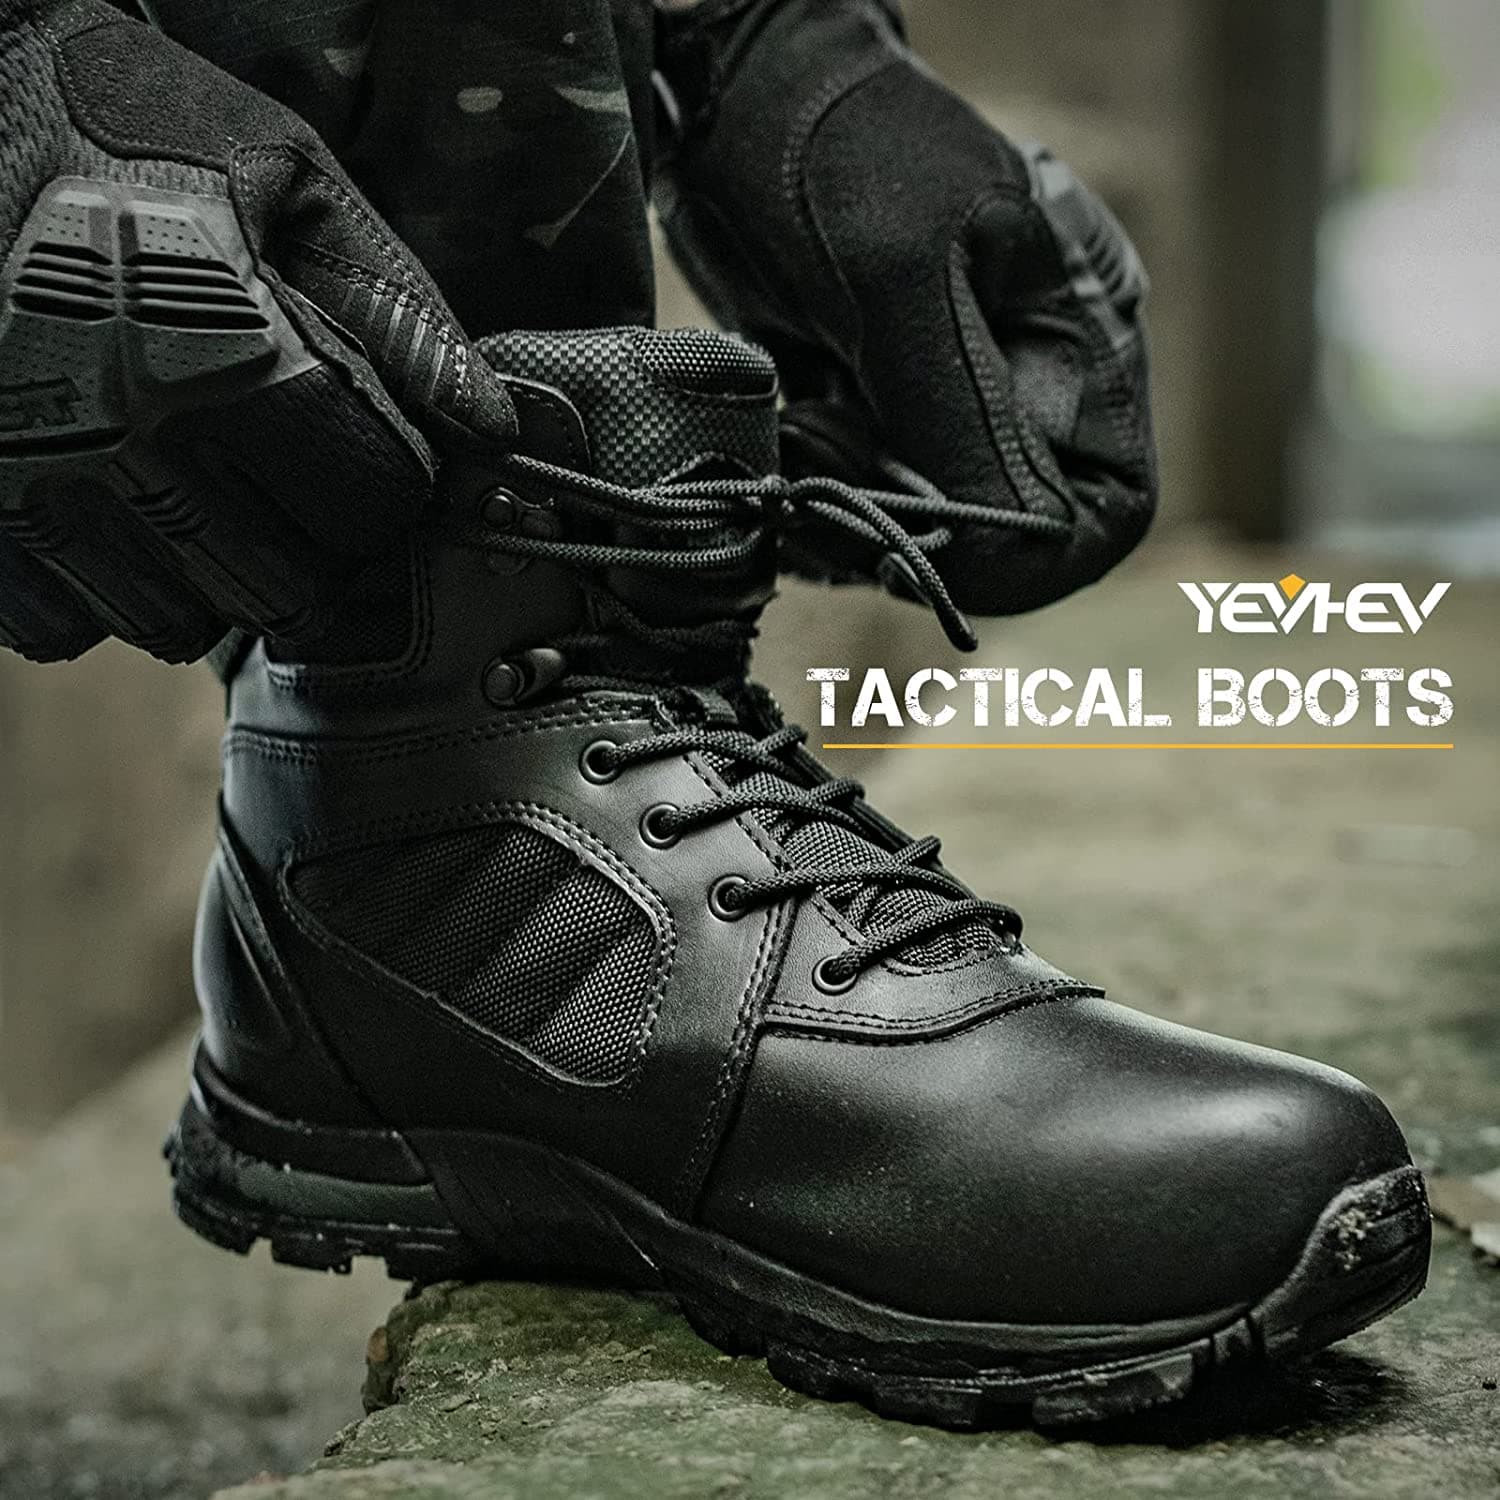 Lightweight Water Repellent Leather Combat Boots for Men